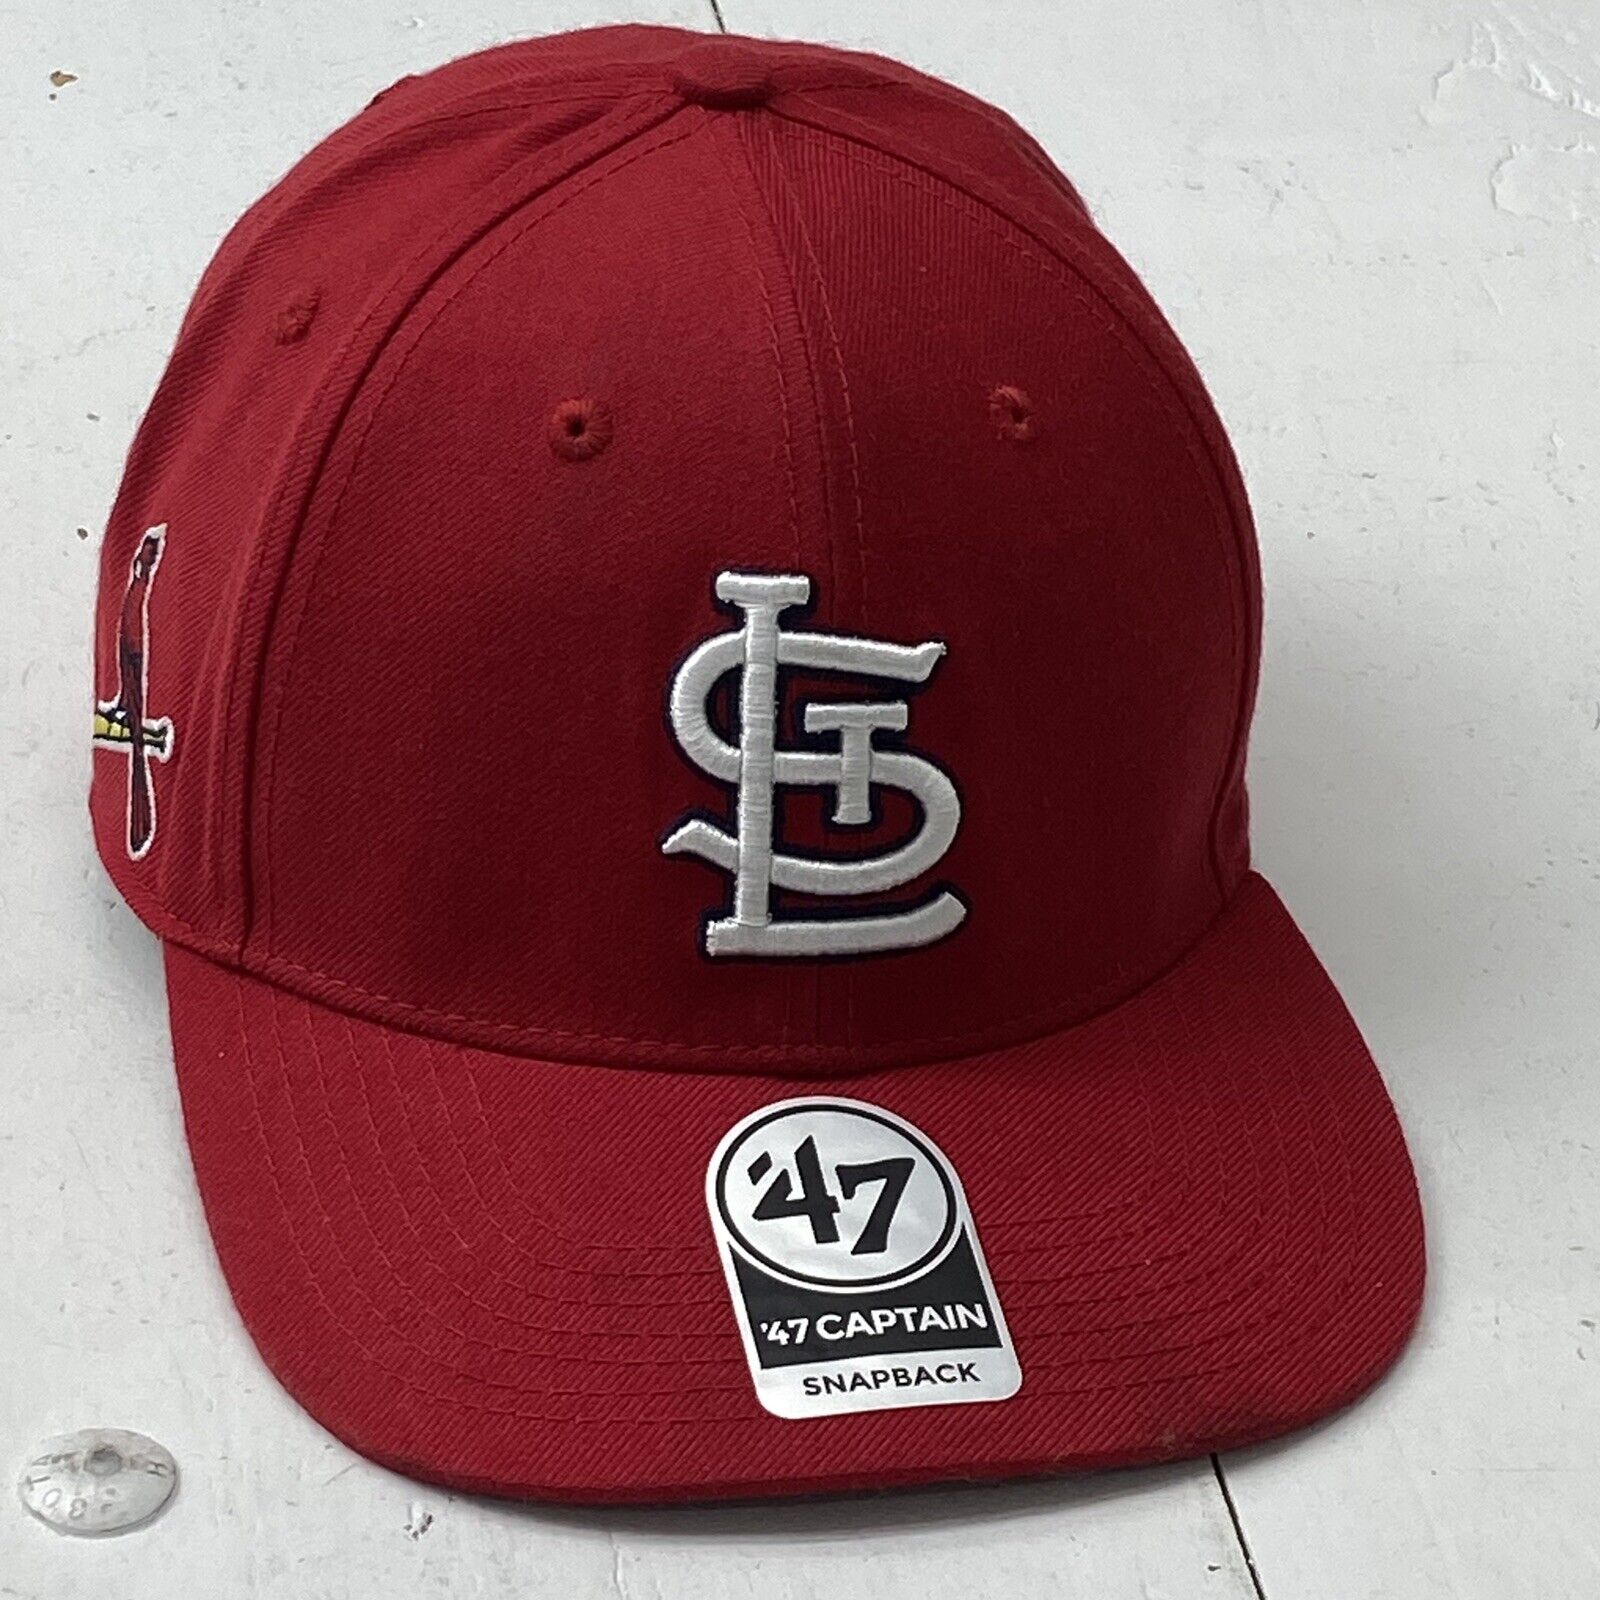 Big Size St. Louis Cardinals Cap